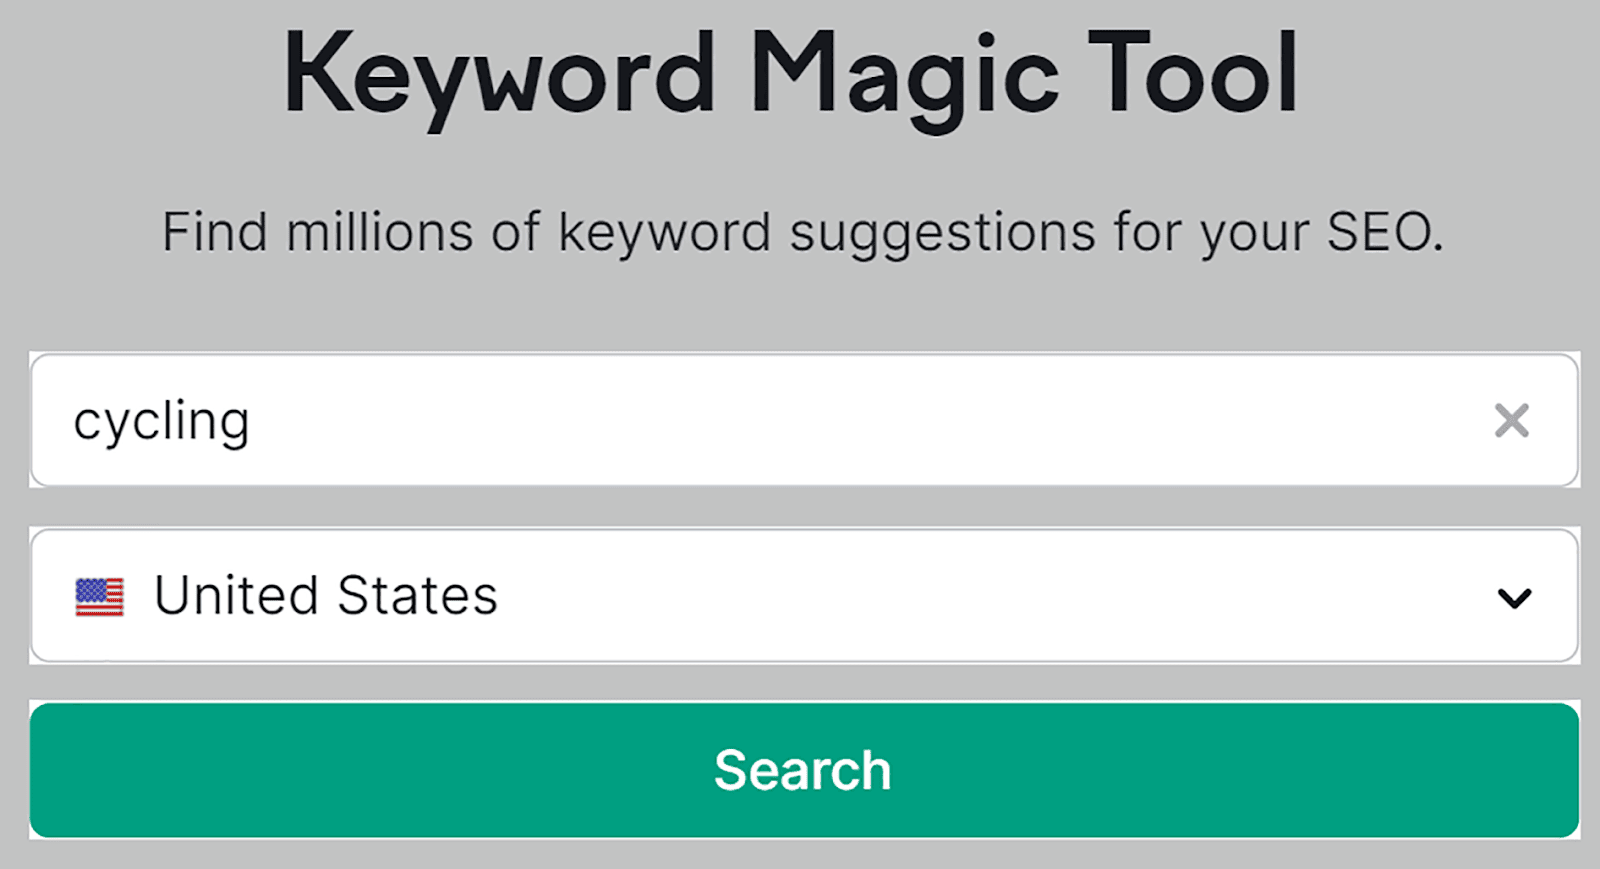 Enter seed keyword 'cycling' on Keyword Magic tool then hit search